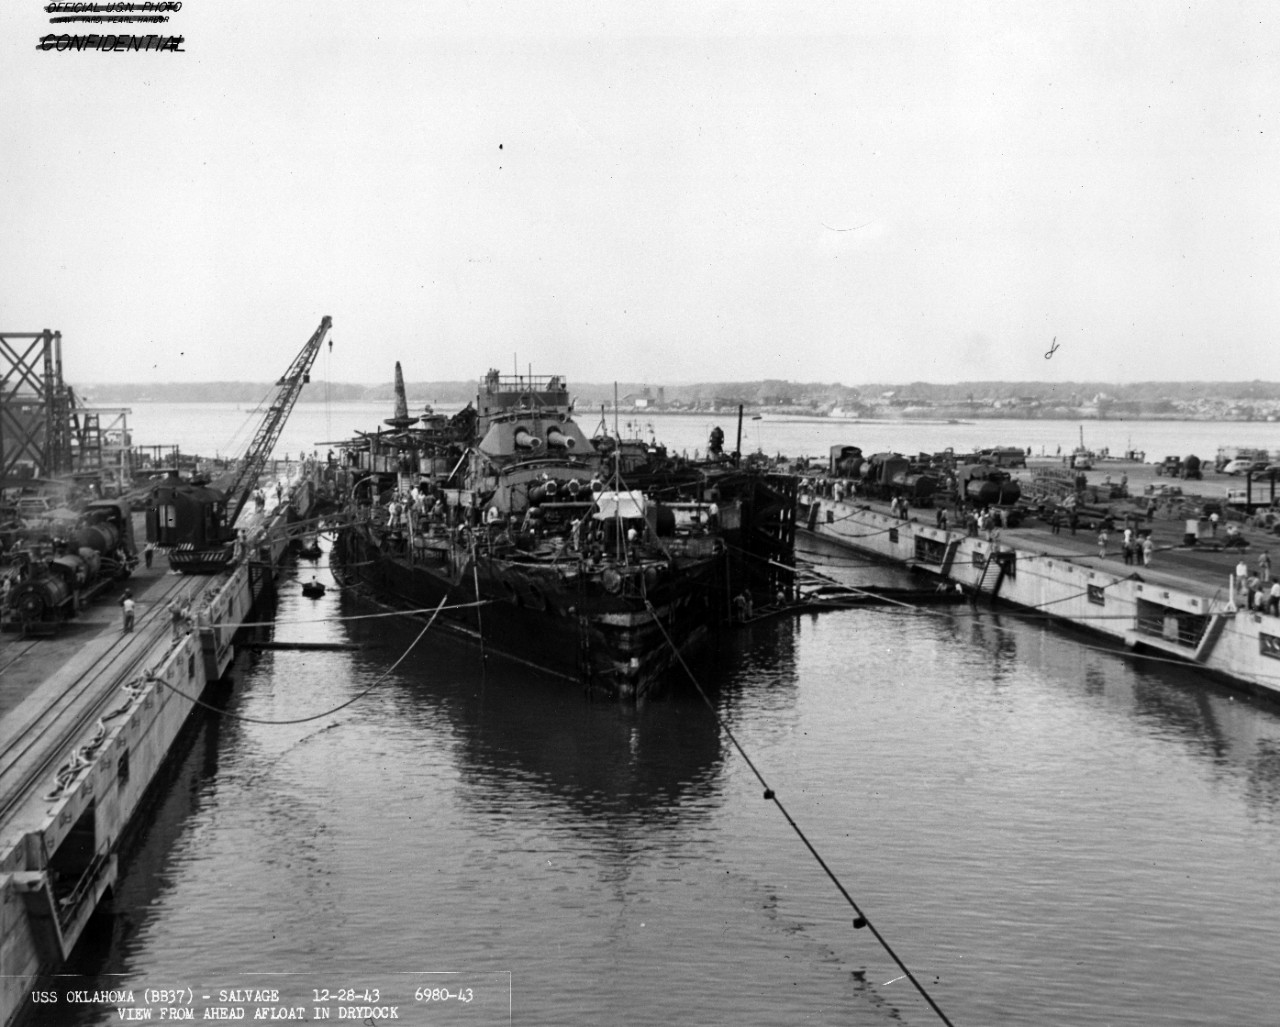 S-082-D(6).05 USS Oklahoma Salvage, Entering Drydock